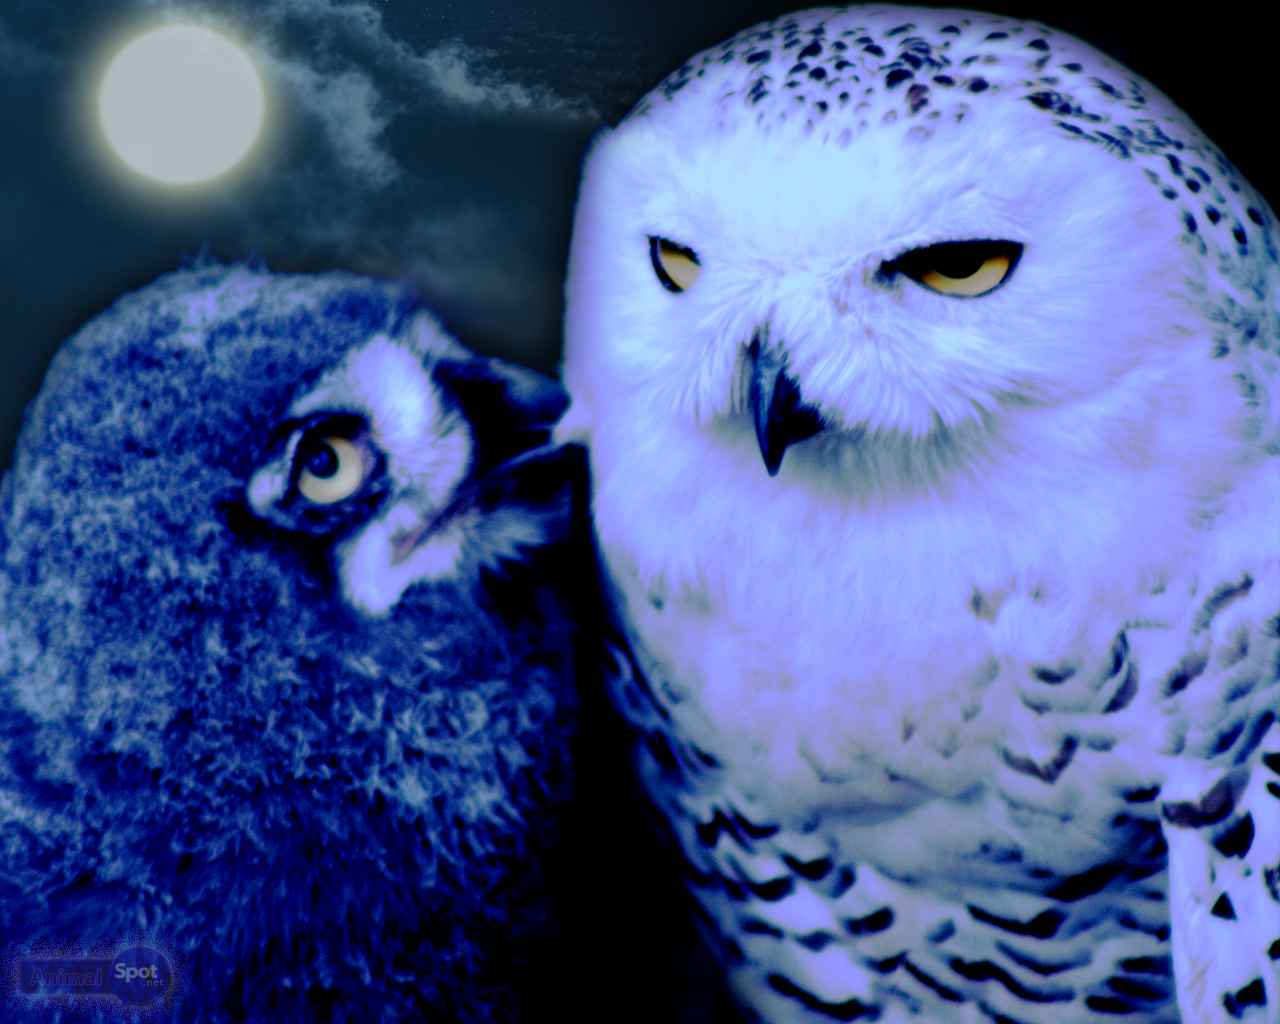 Owl Wallpaper Background Desktop